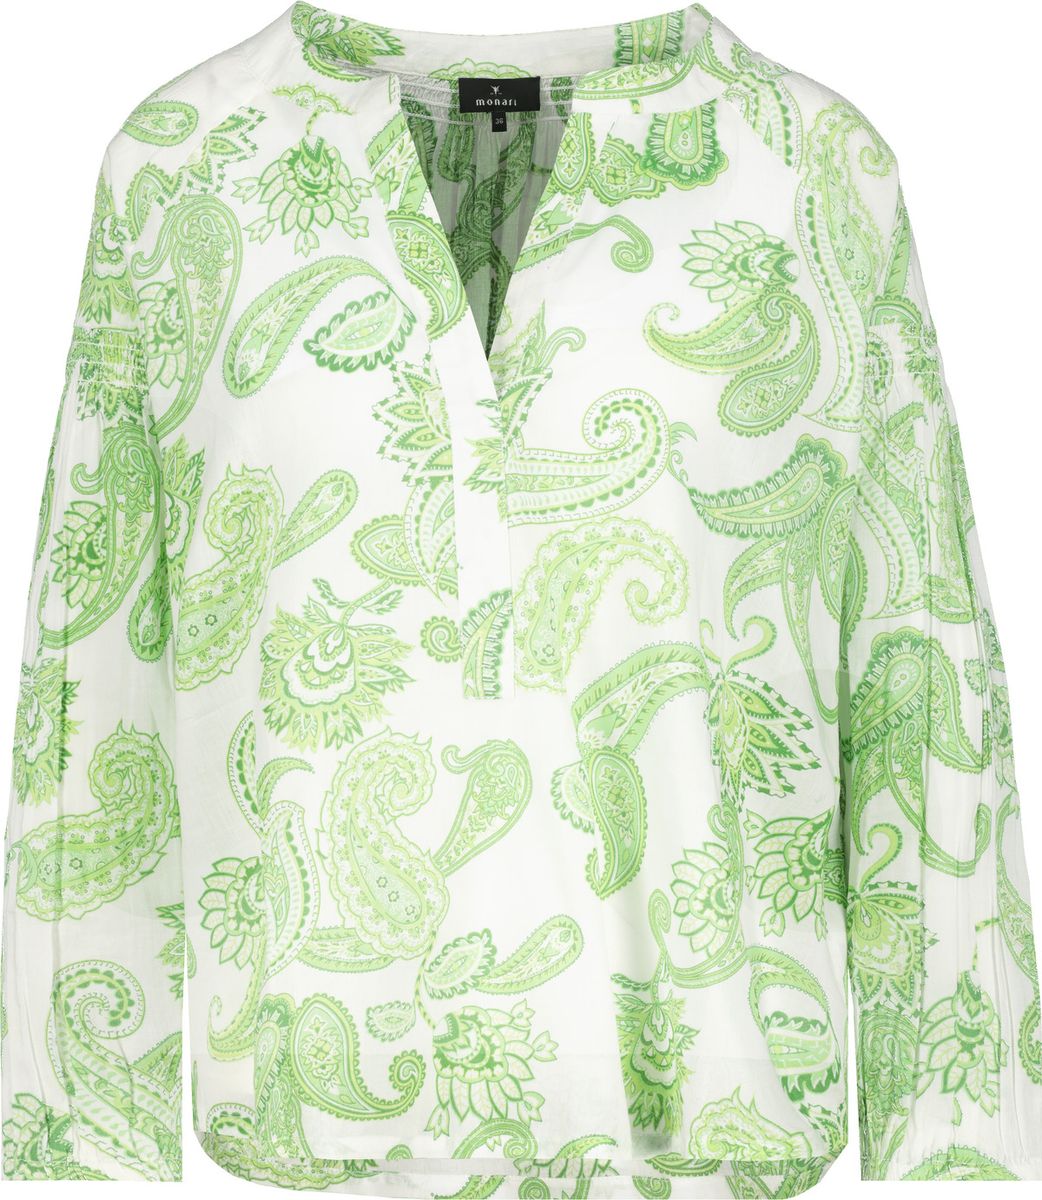 MONARI - Bluse, Modehaus gemustert Onlineshop - Fahr green pastell